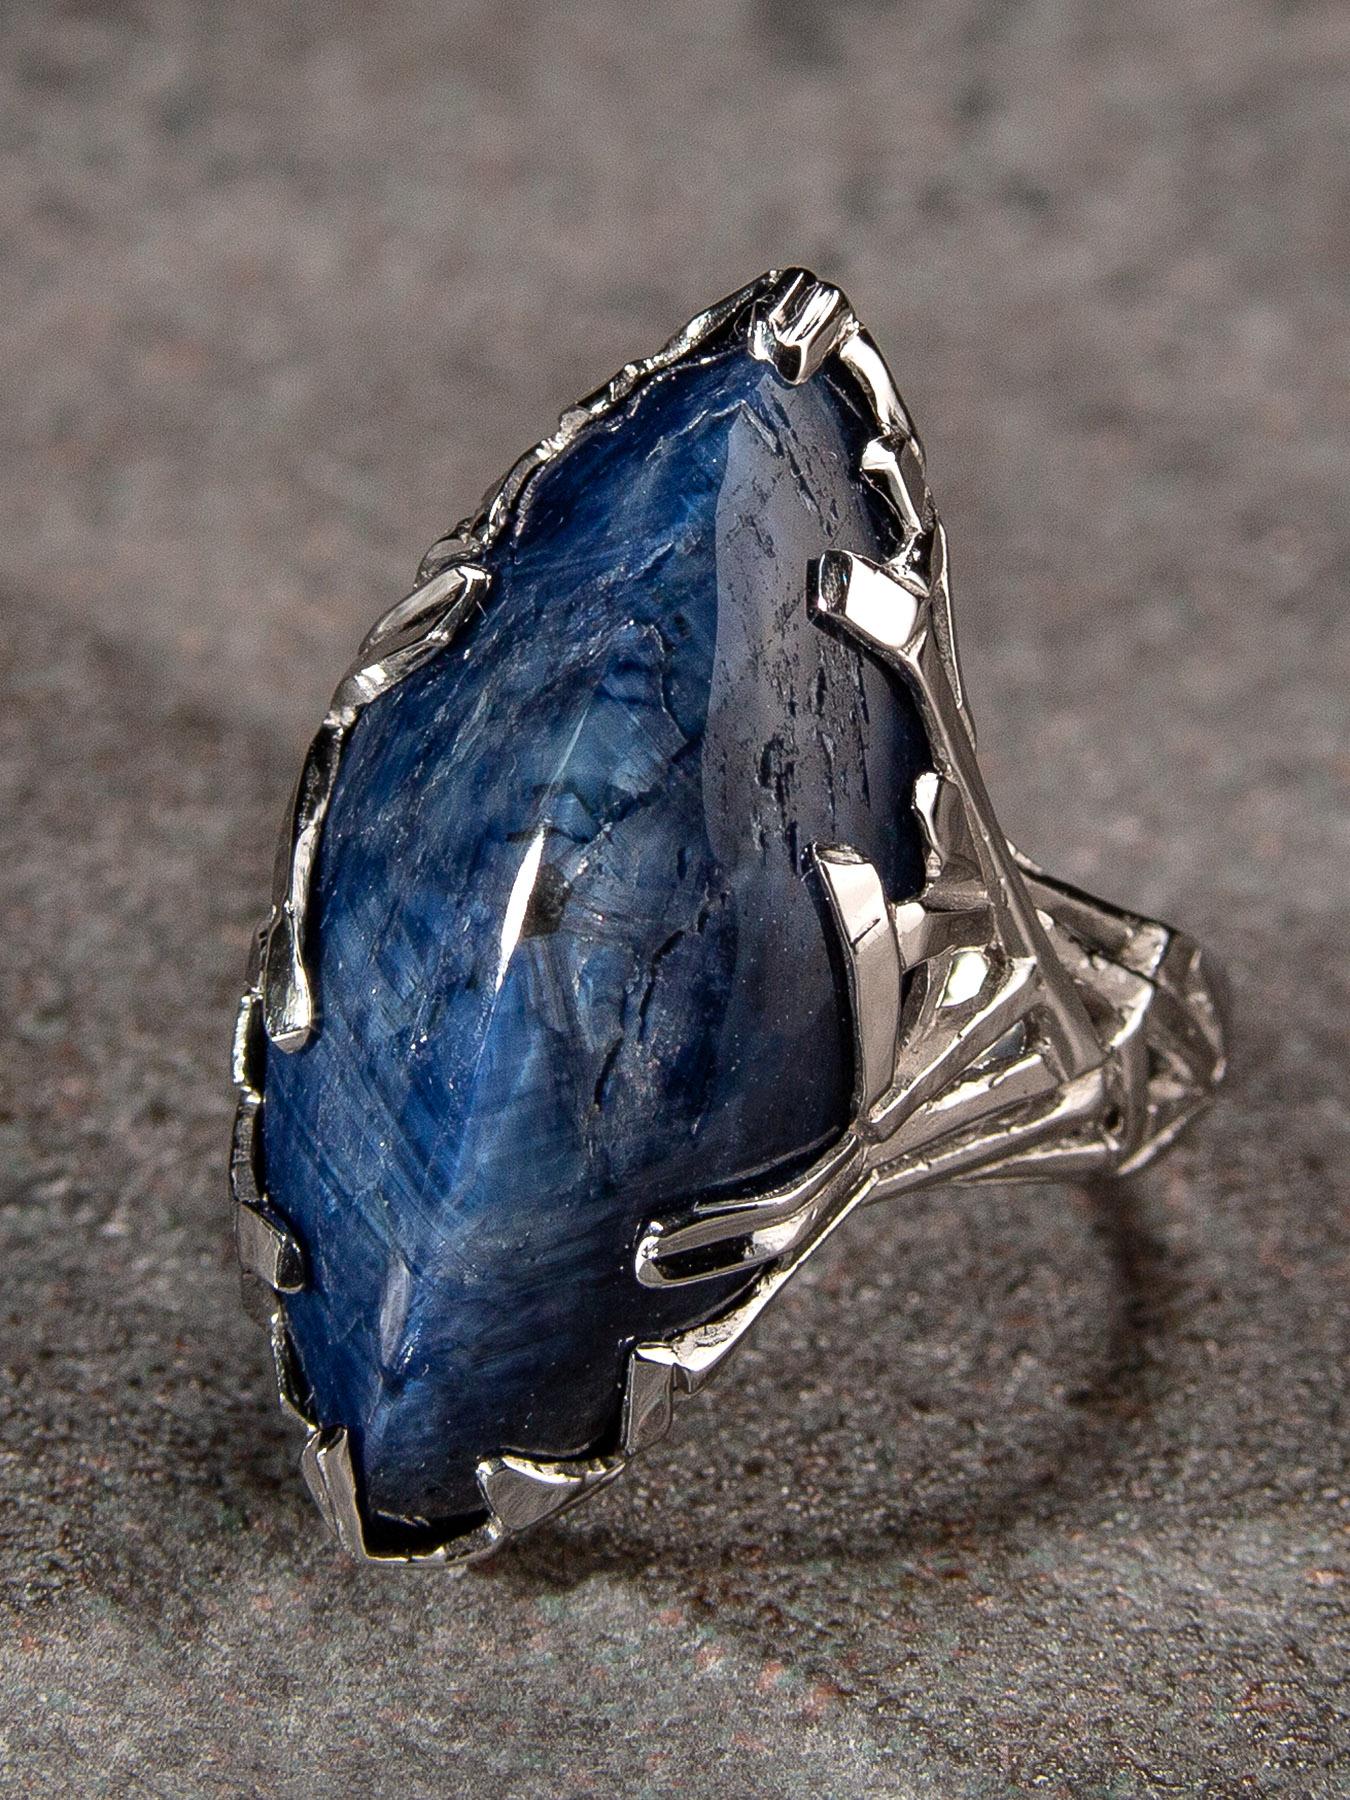 14K white gold ring with natural cabochon-cut Sapphire 

Sapphire origin - Sri-Lanka

Sapphire measurements - 0.31 х 0.51 х 1.1 in / 8 х 13 х 28 mm

gemstone weight - 25.80 carats

ring weight - 12.13 grams

ring size - 6.5 US